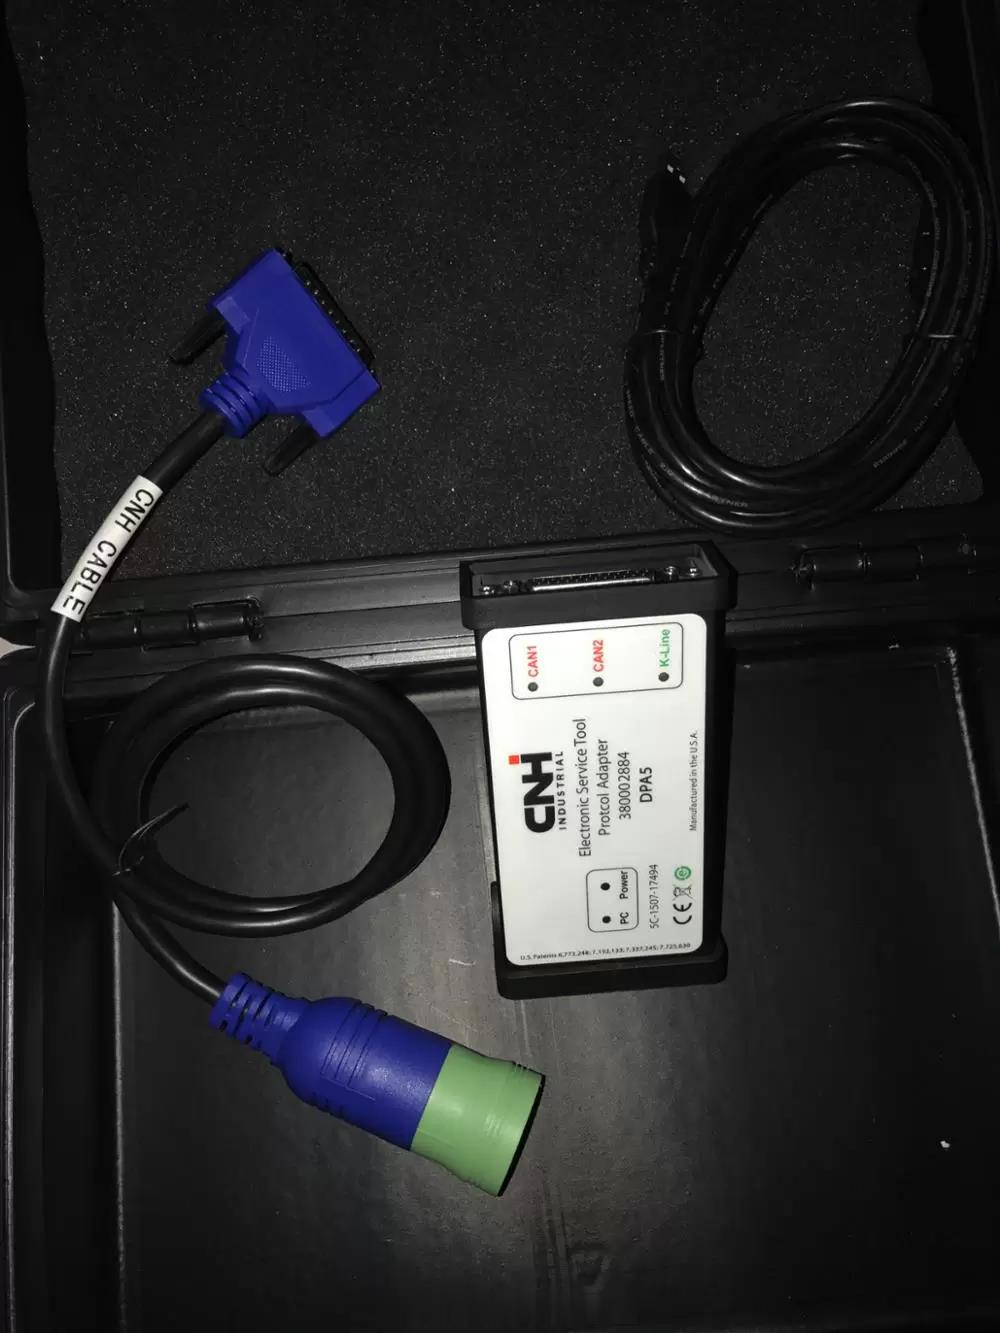 CNH DPA5 kit diagnostic tool with cnh est-4 (2)